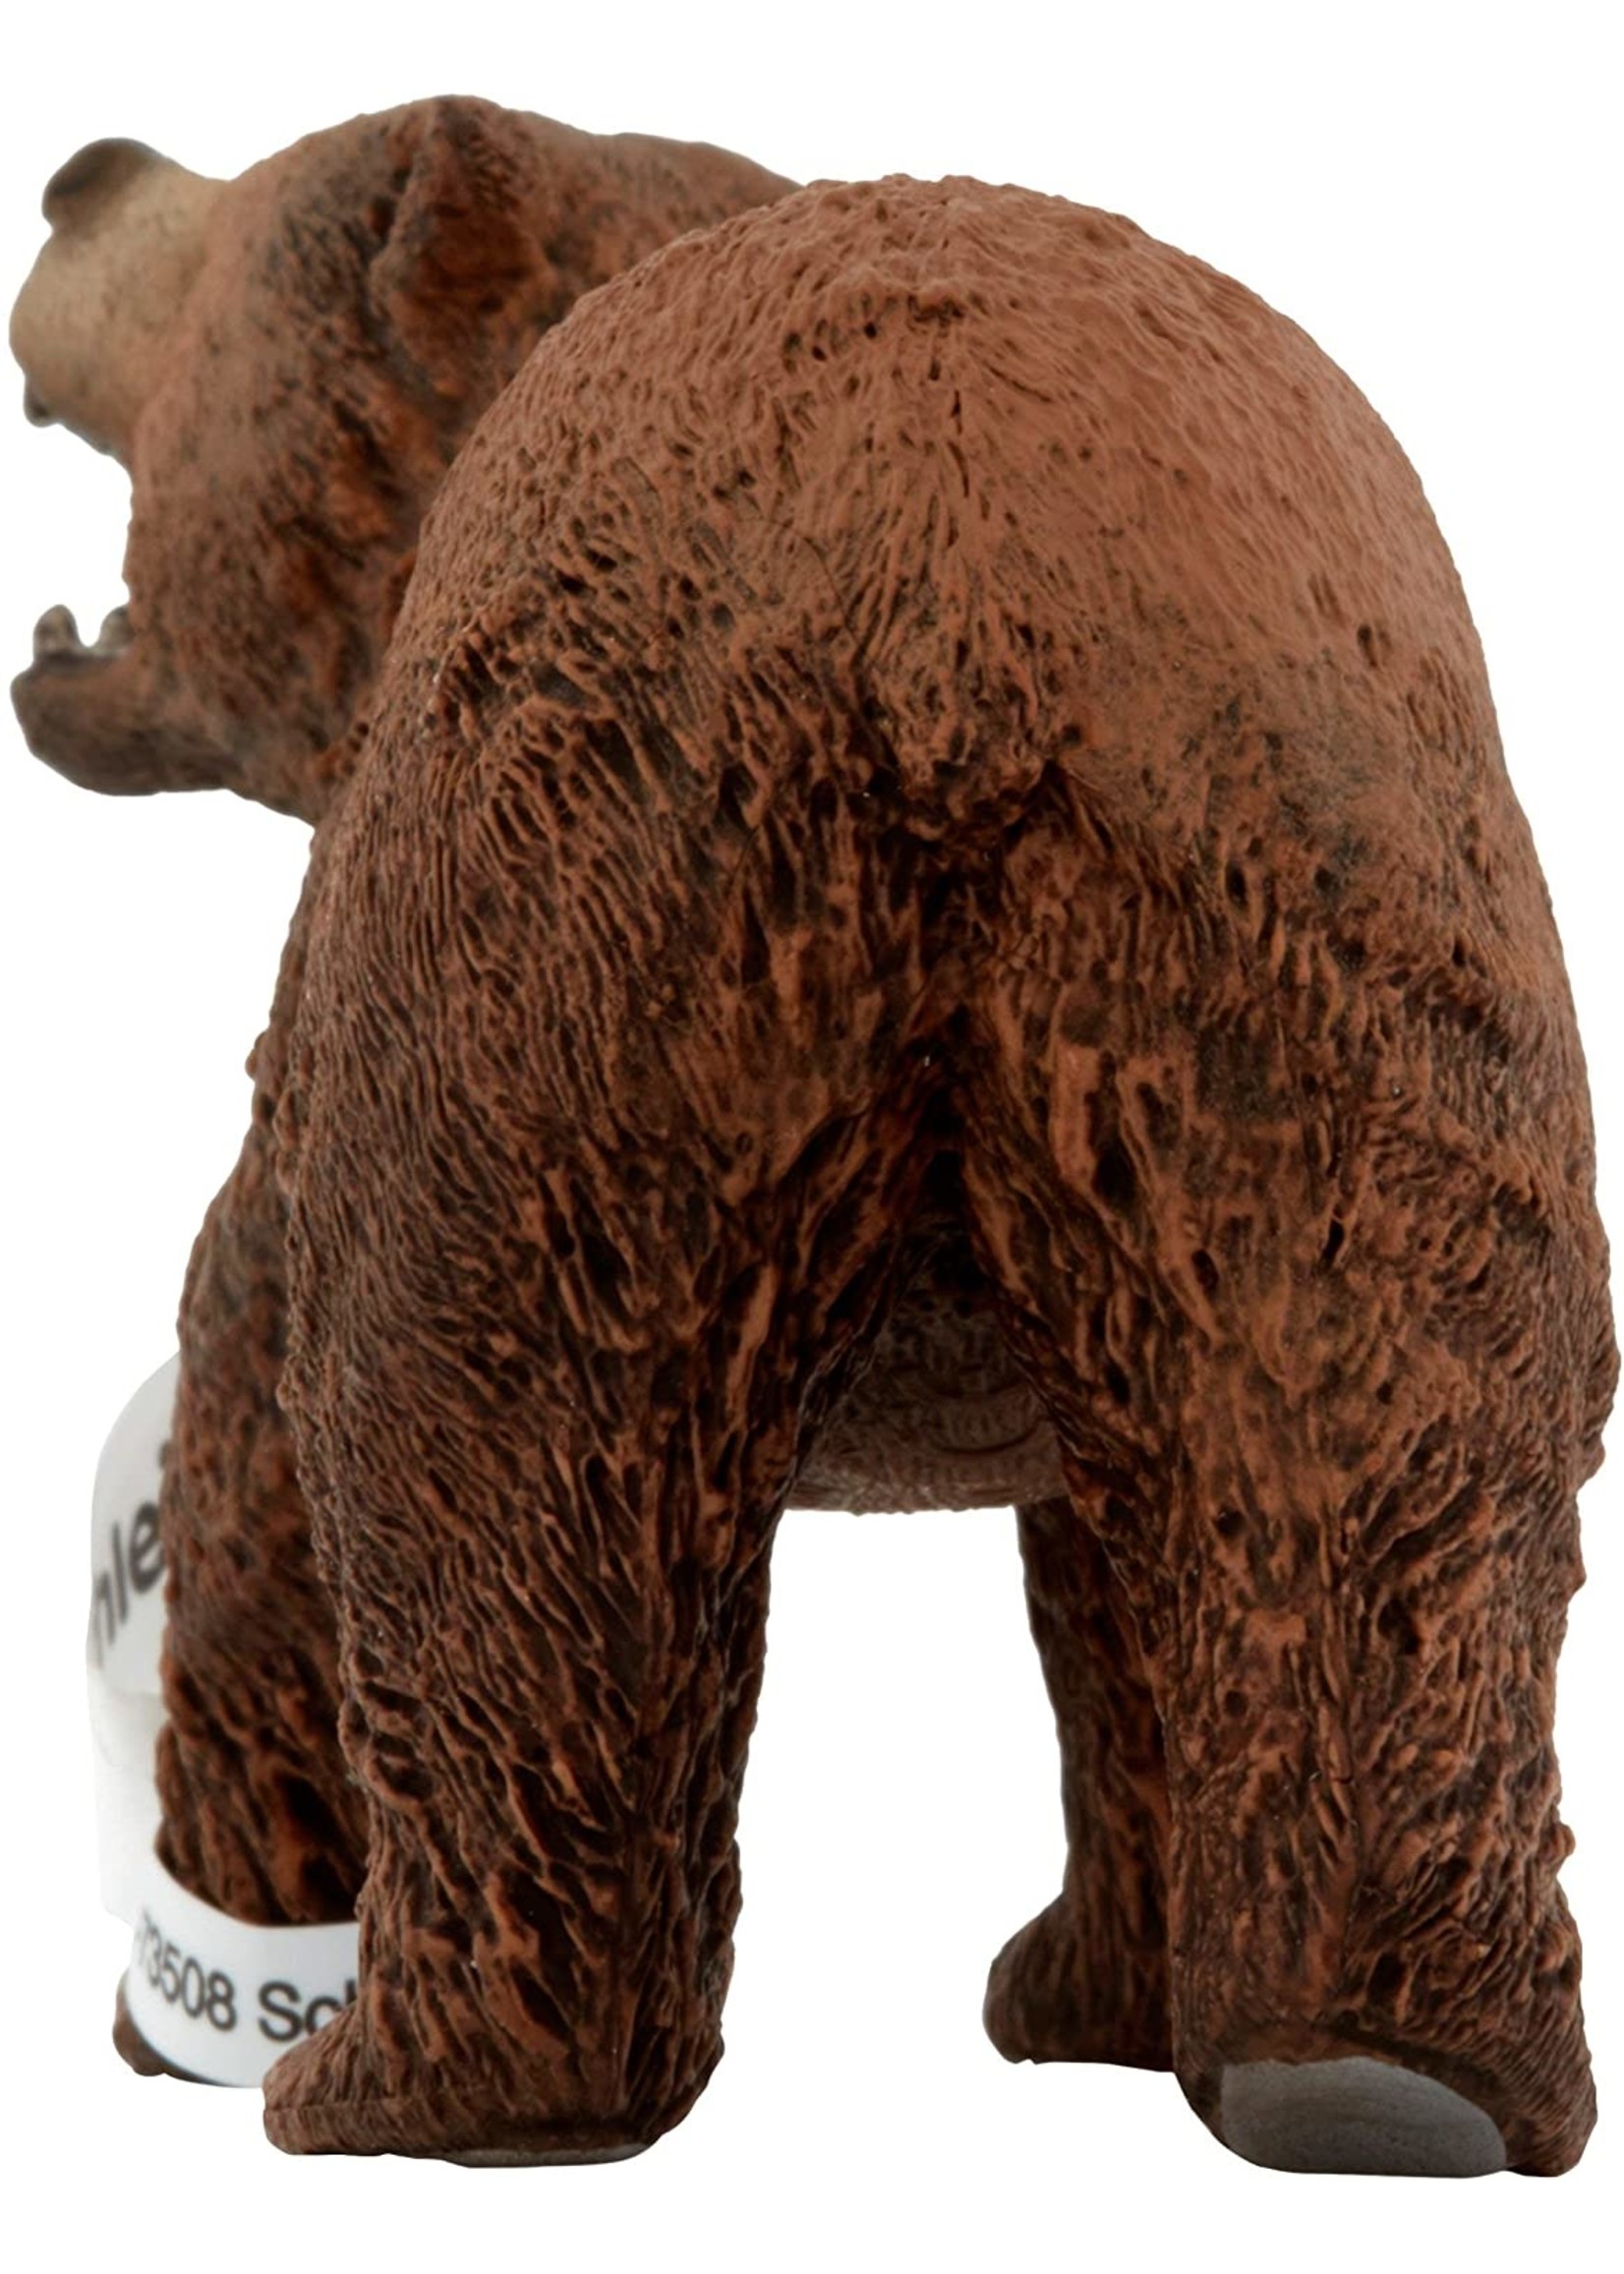 Schleich 14685 - Grizzly Bear